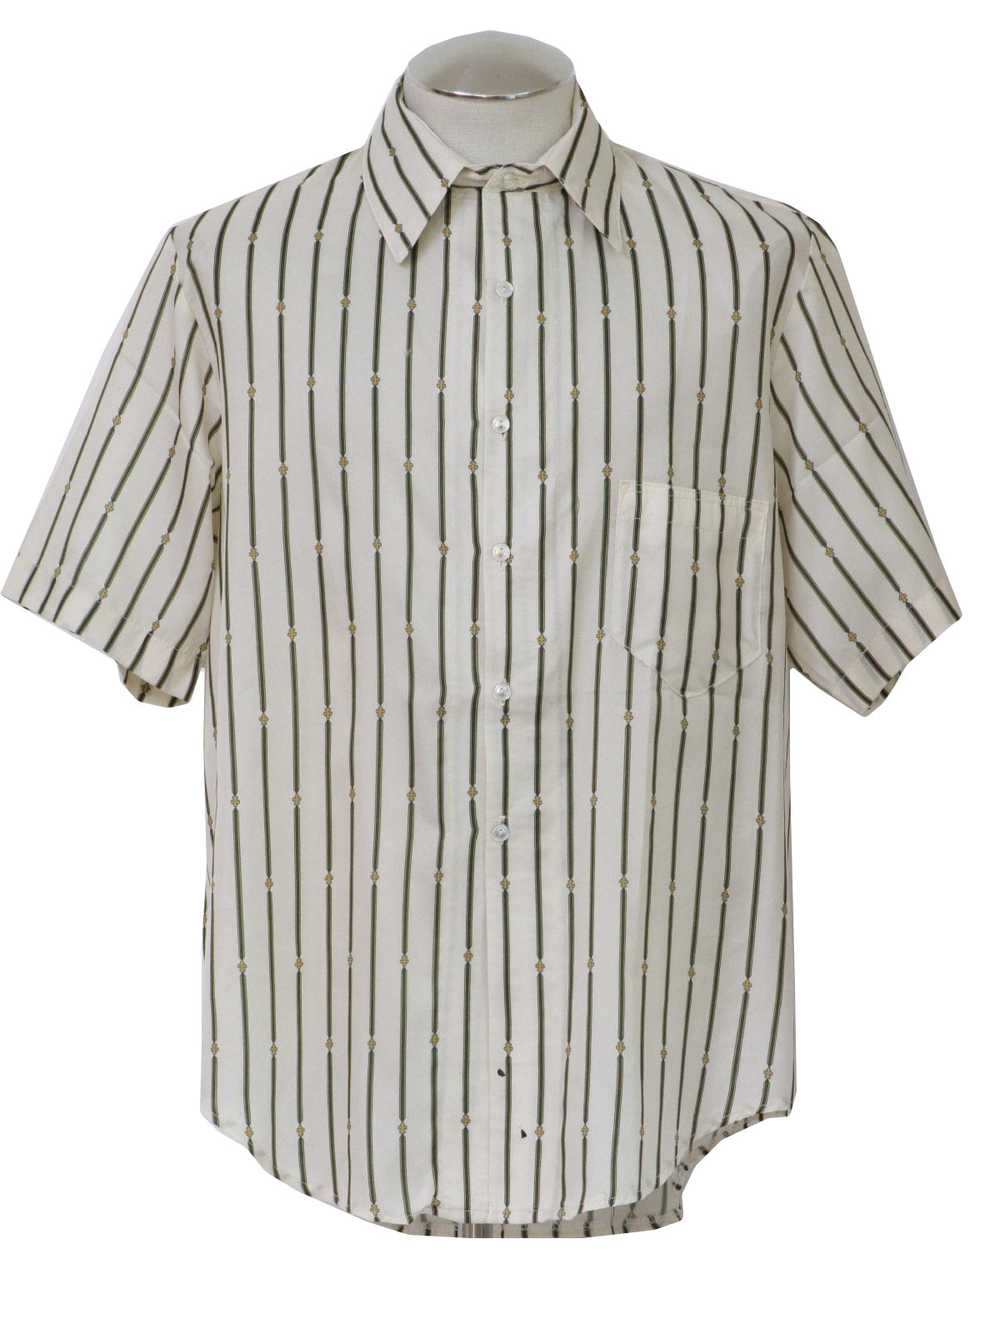 1970's Mens Polyester Shirt - image 1